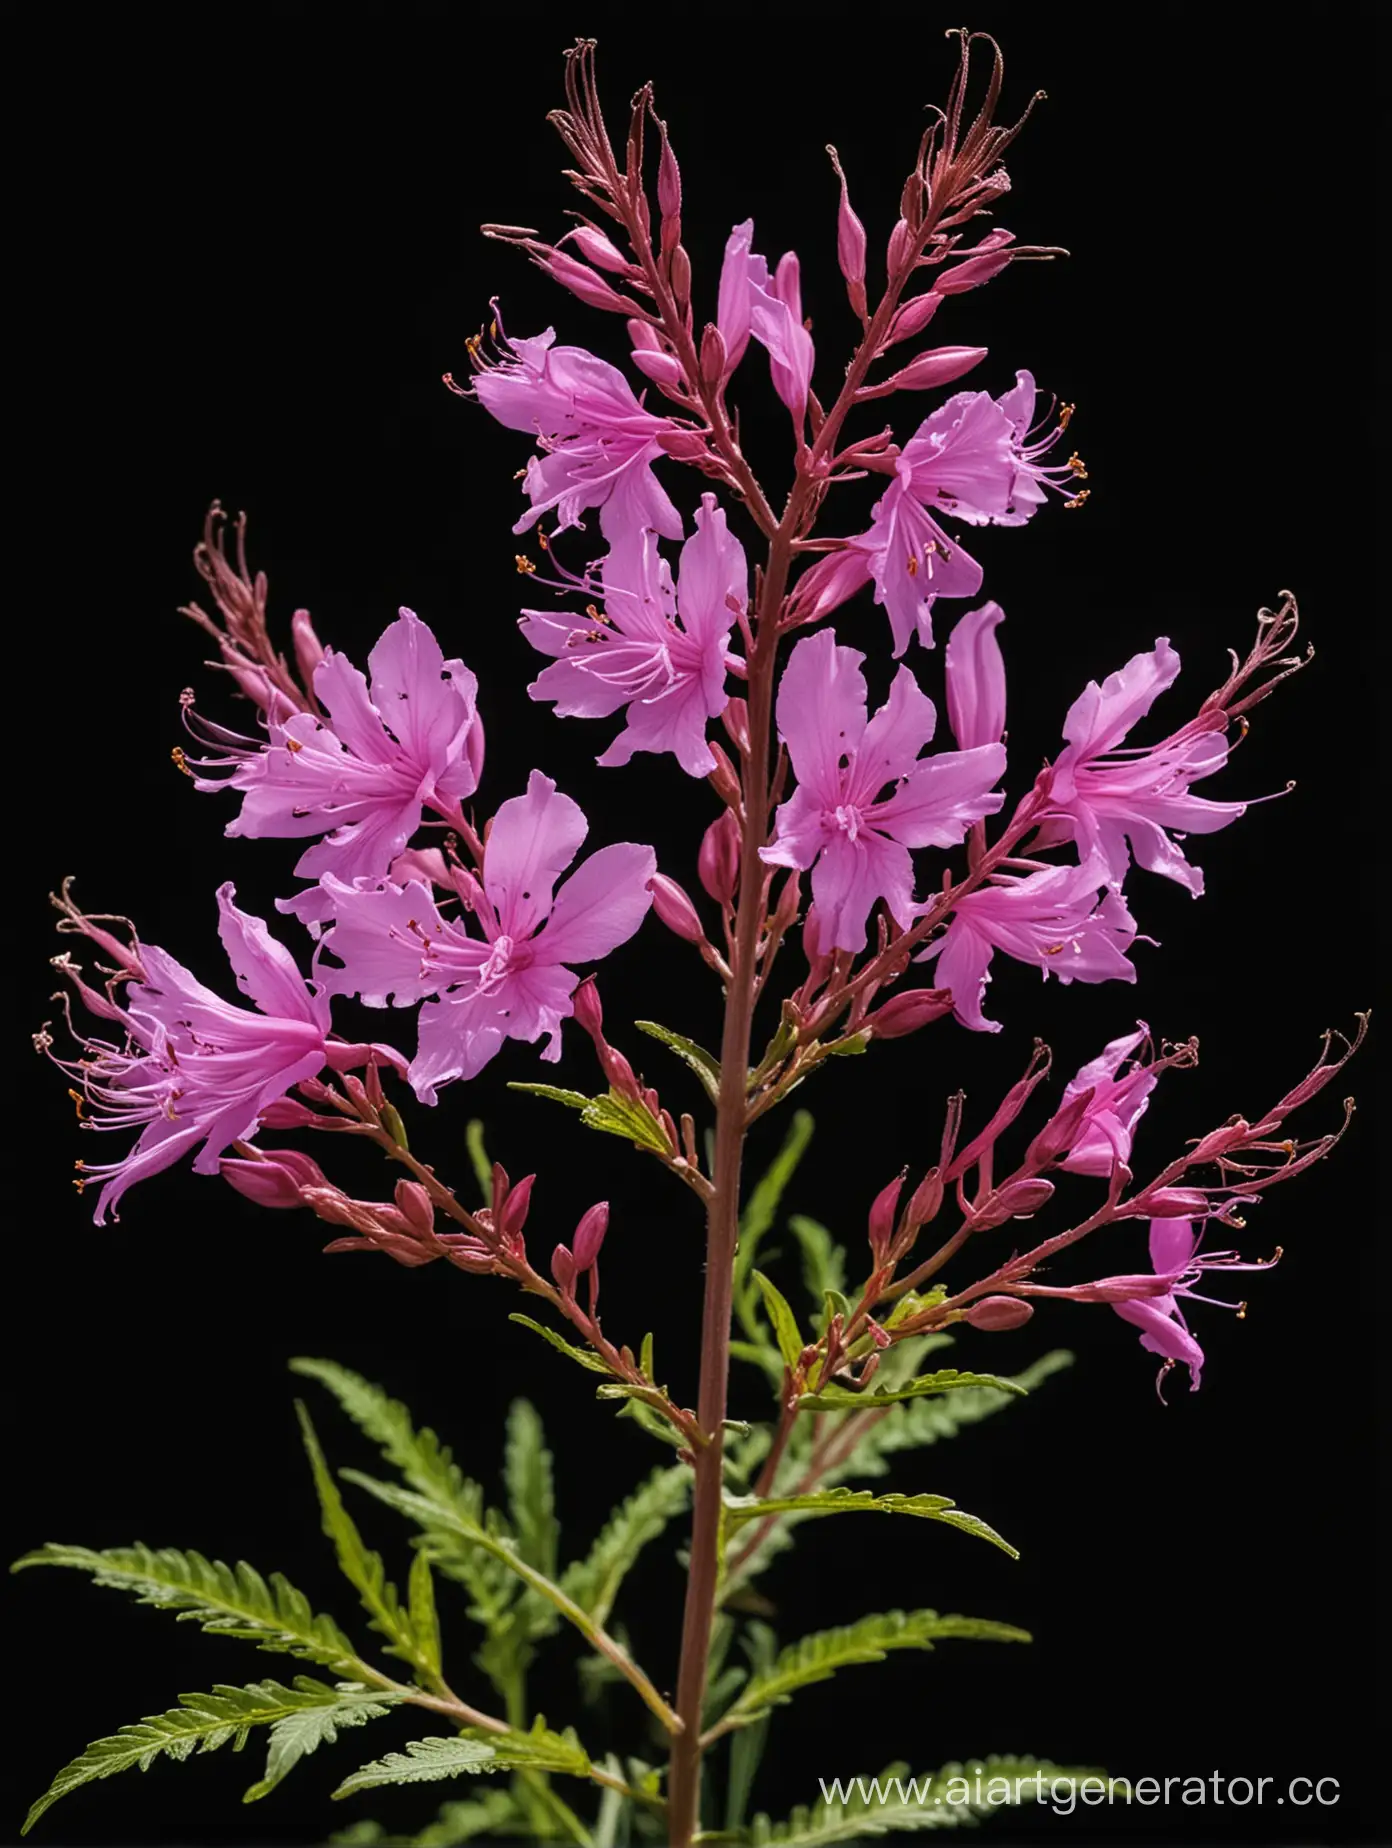 CloseUp-Vibrant-Fireweed-Wildflower-on-Sleek-Black-Background